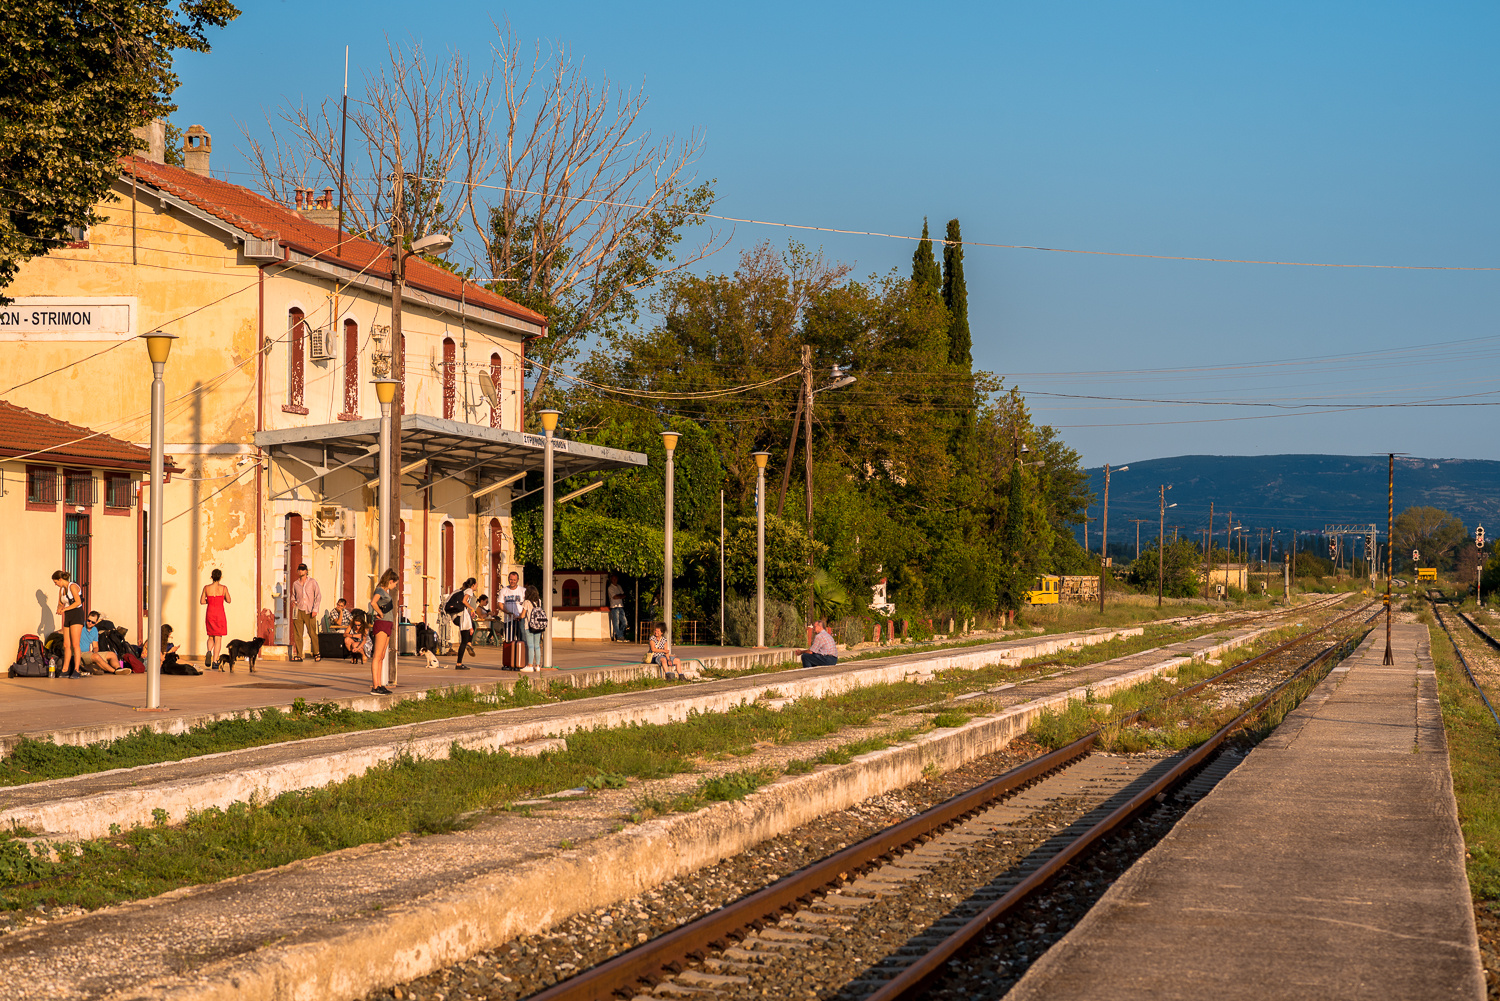 Strimon train station